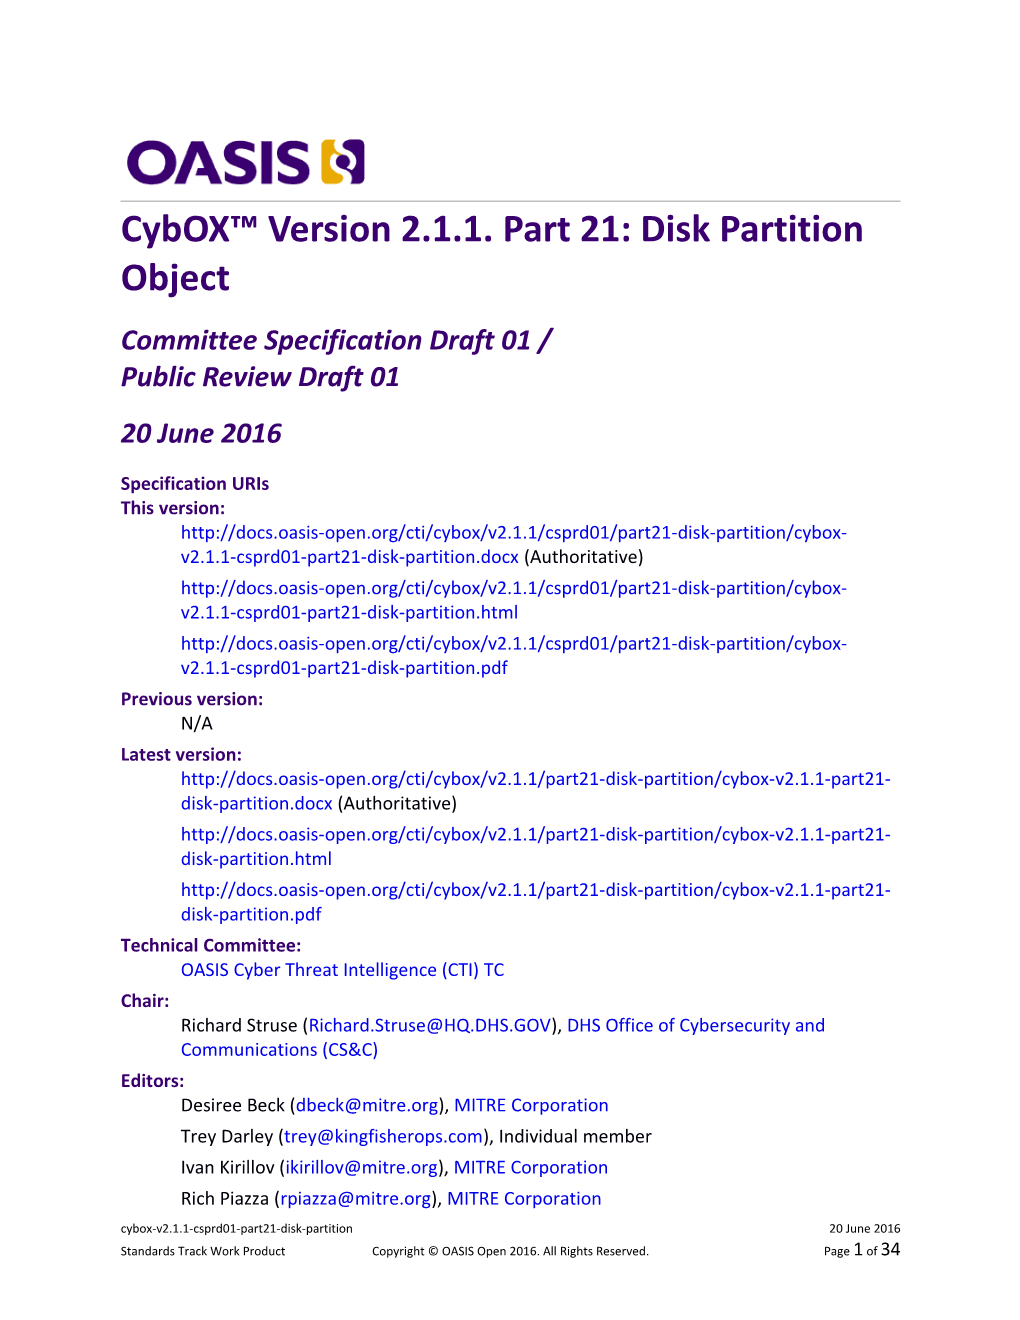 Cybox Version 2.1.1. Part 21: Disk Partition Object